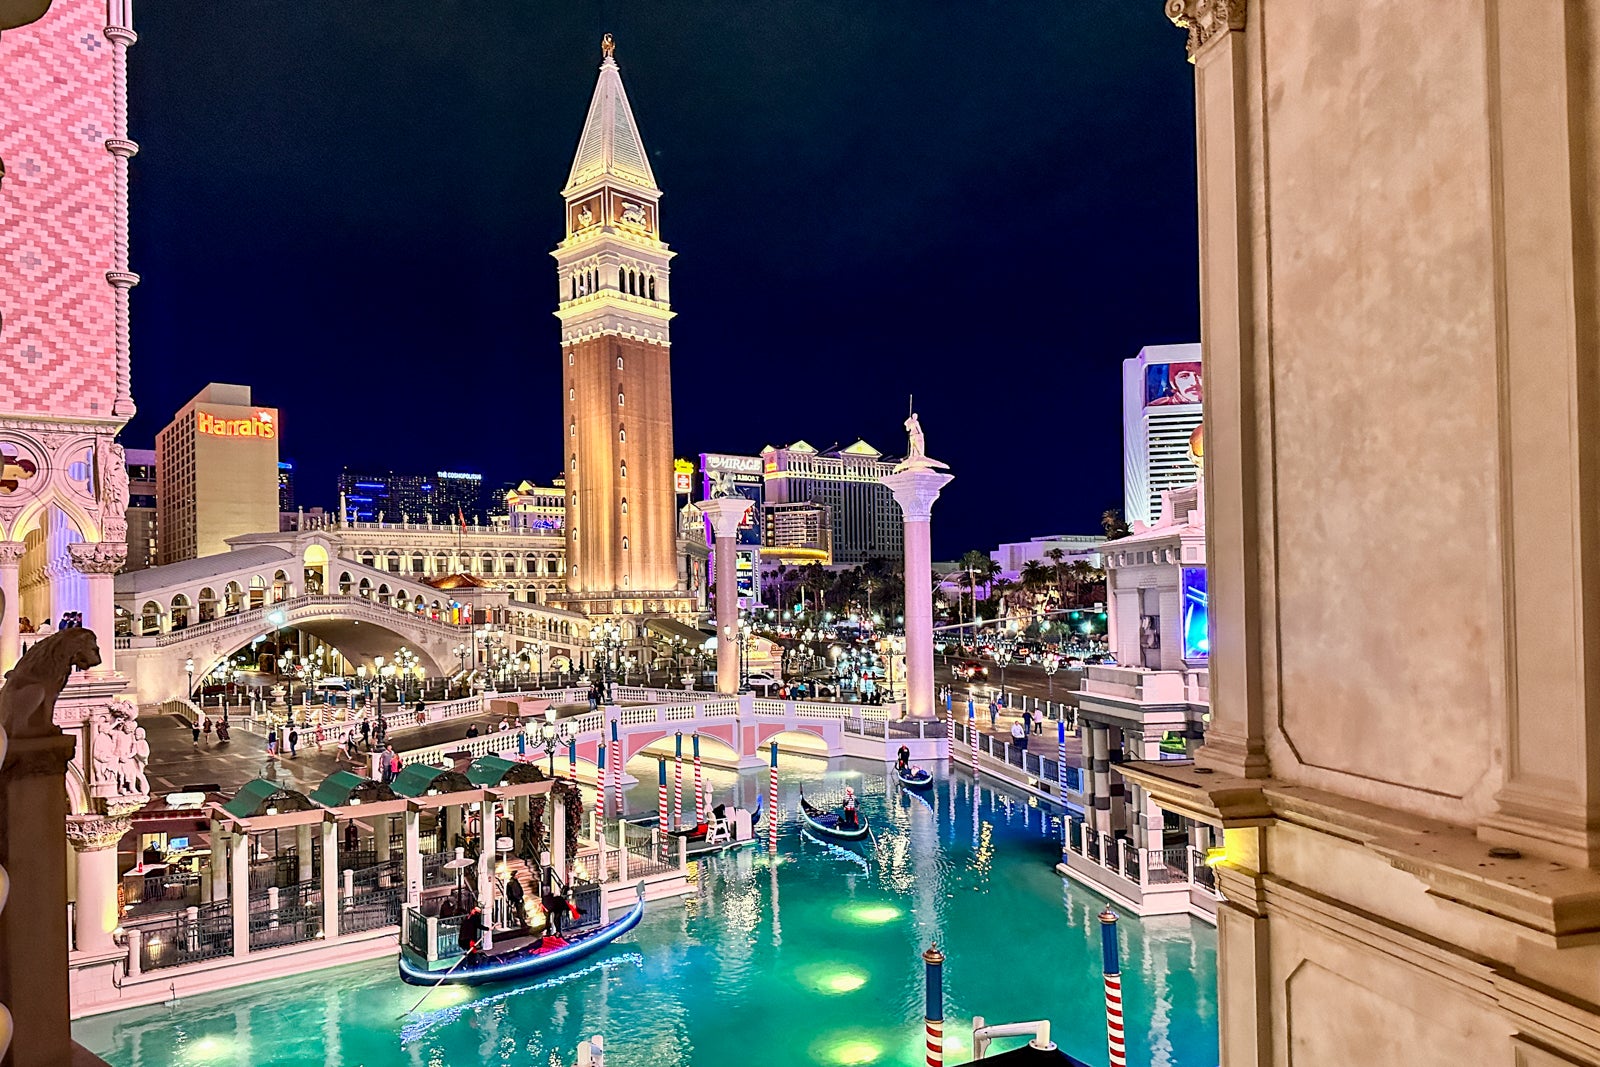 The Venetian considers property upgrades, bonuses for 7K employees